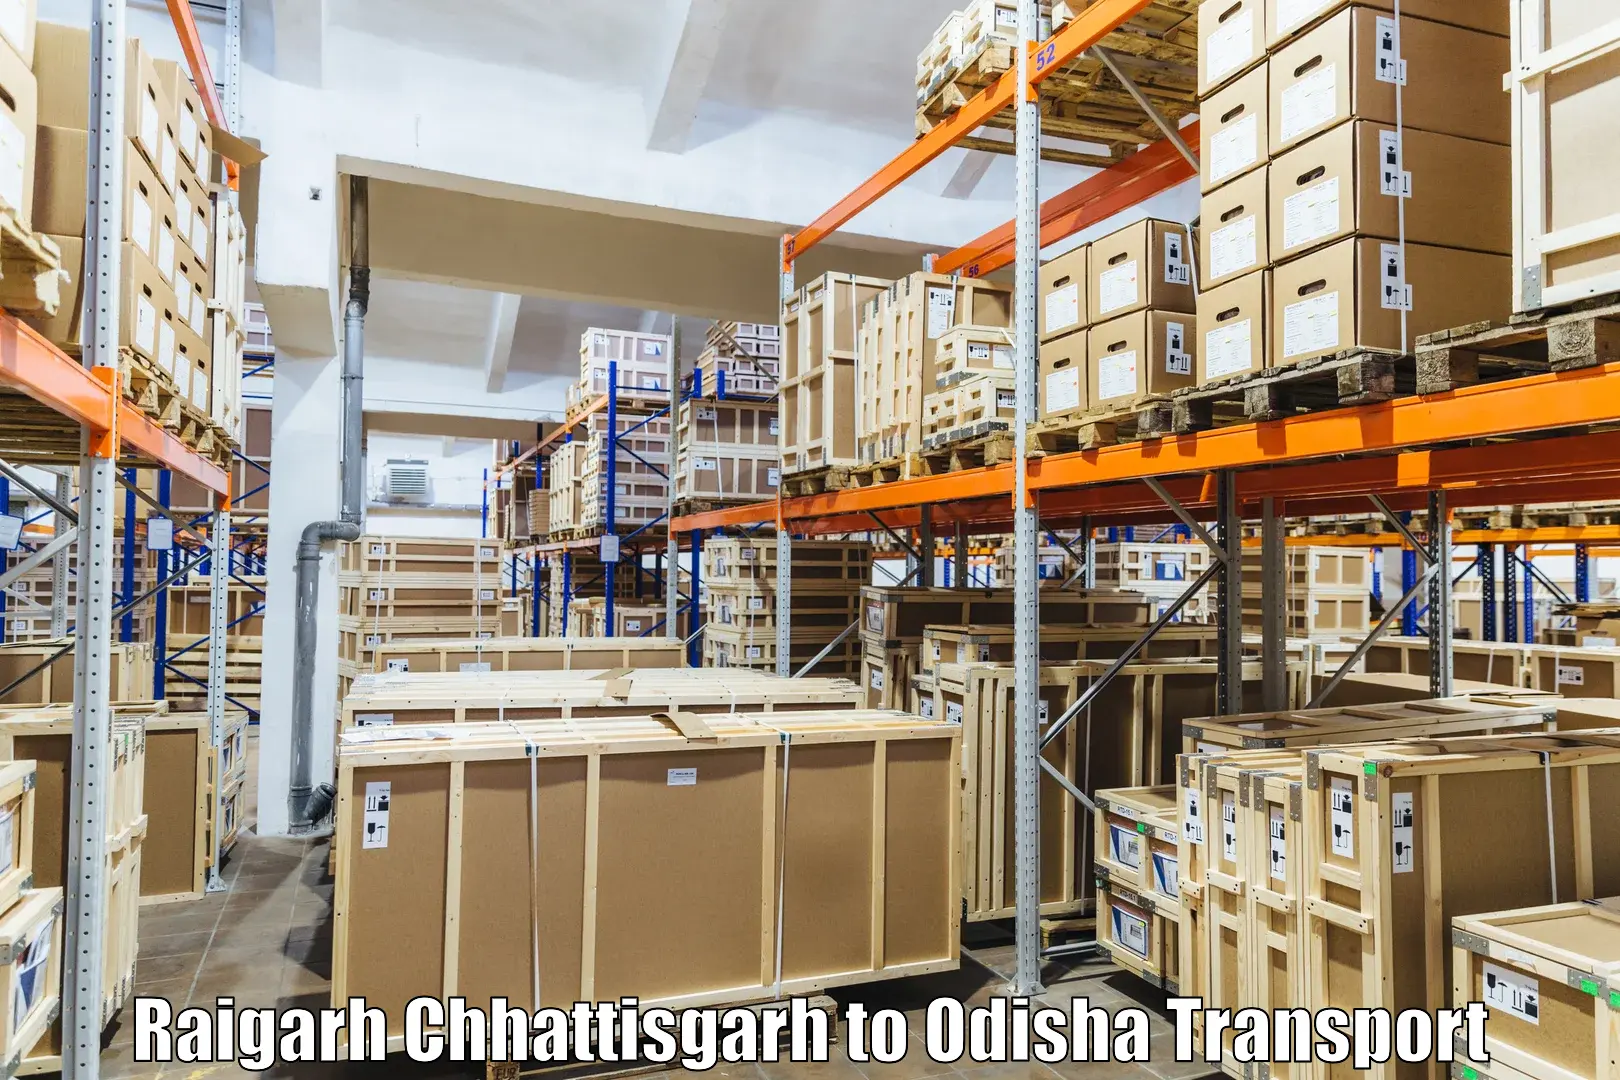 Package delivery services Raigarh Chhattisgarh to Odisha